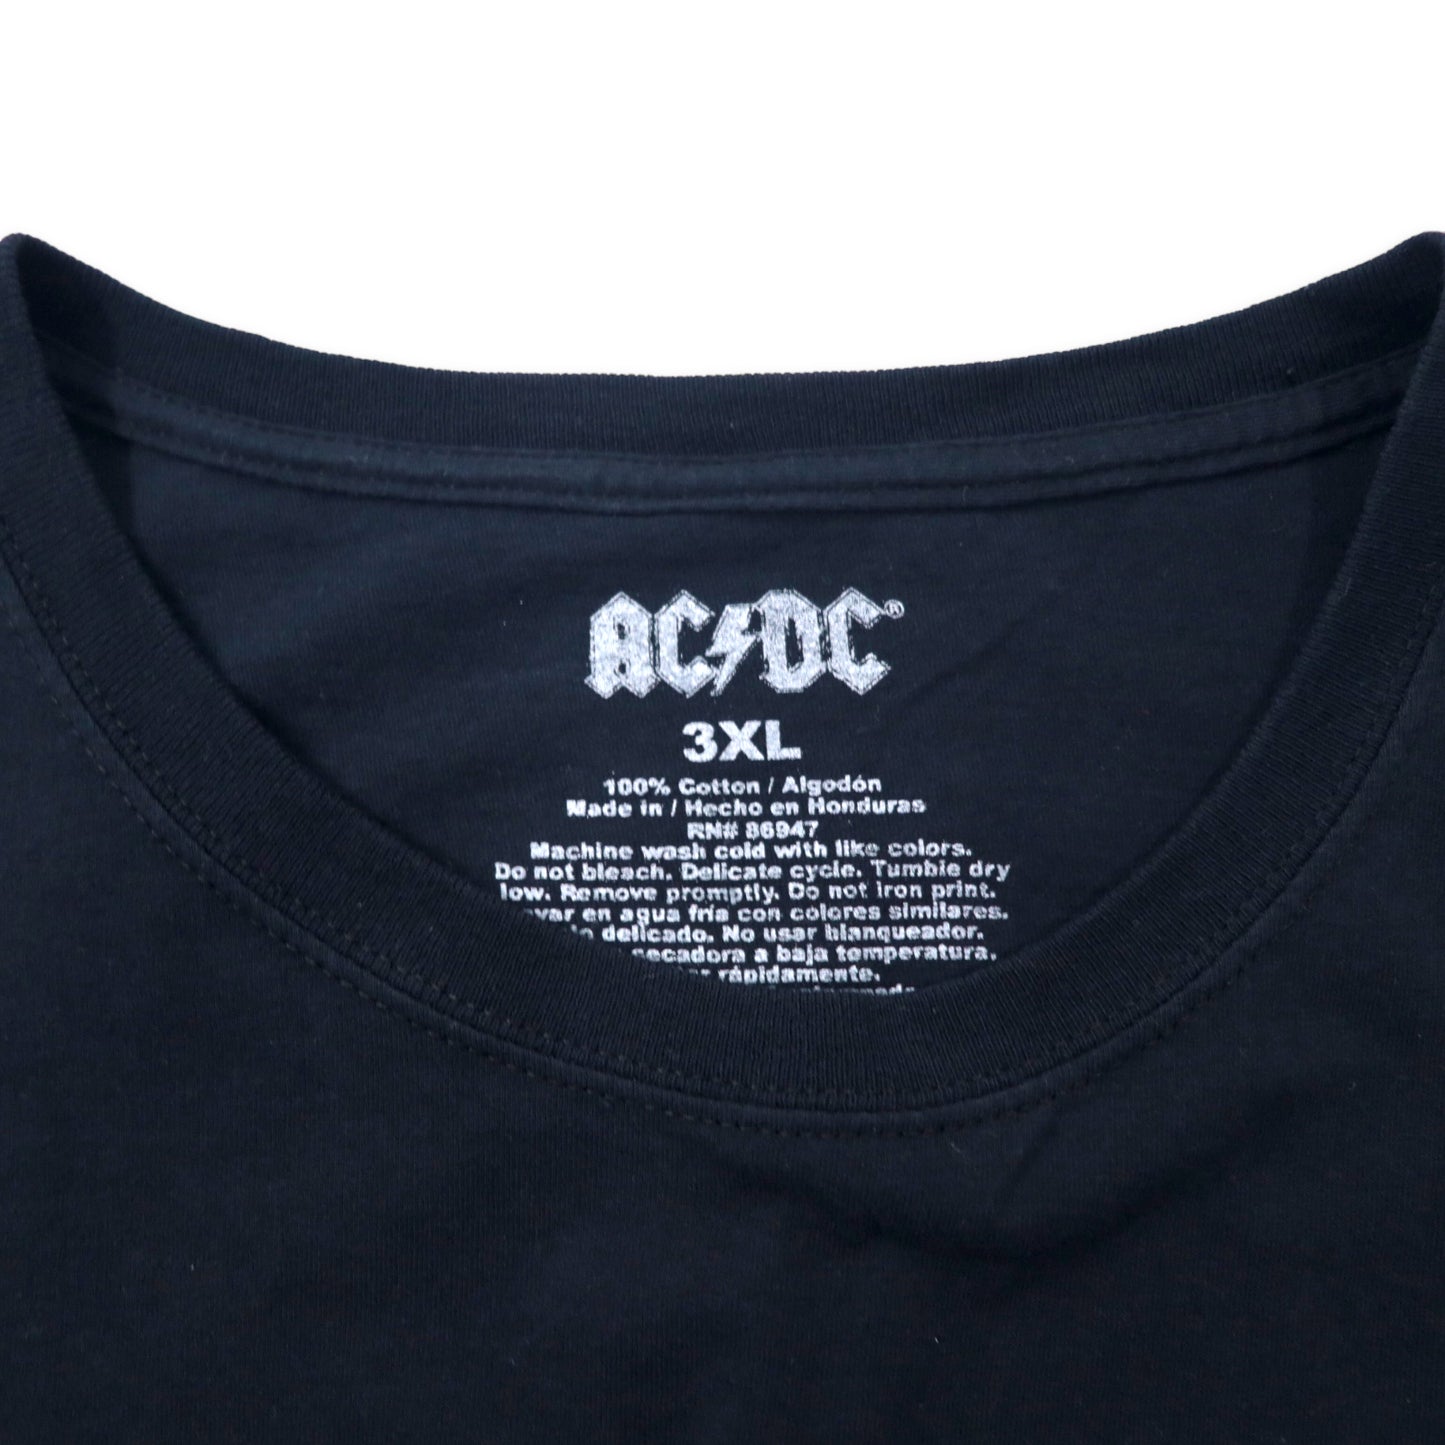 AC/DC Band T-Shirt 3XL Black Cotton Back in Black Big Size